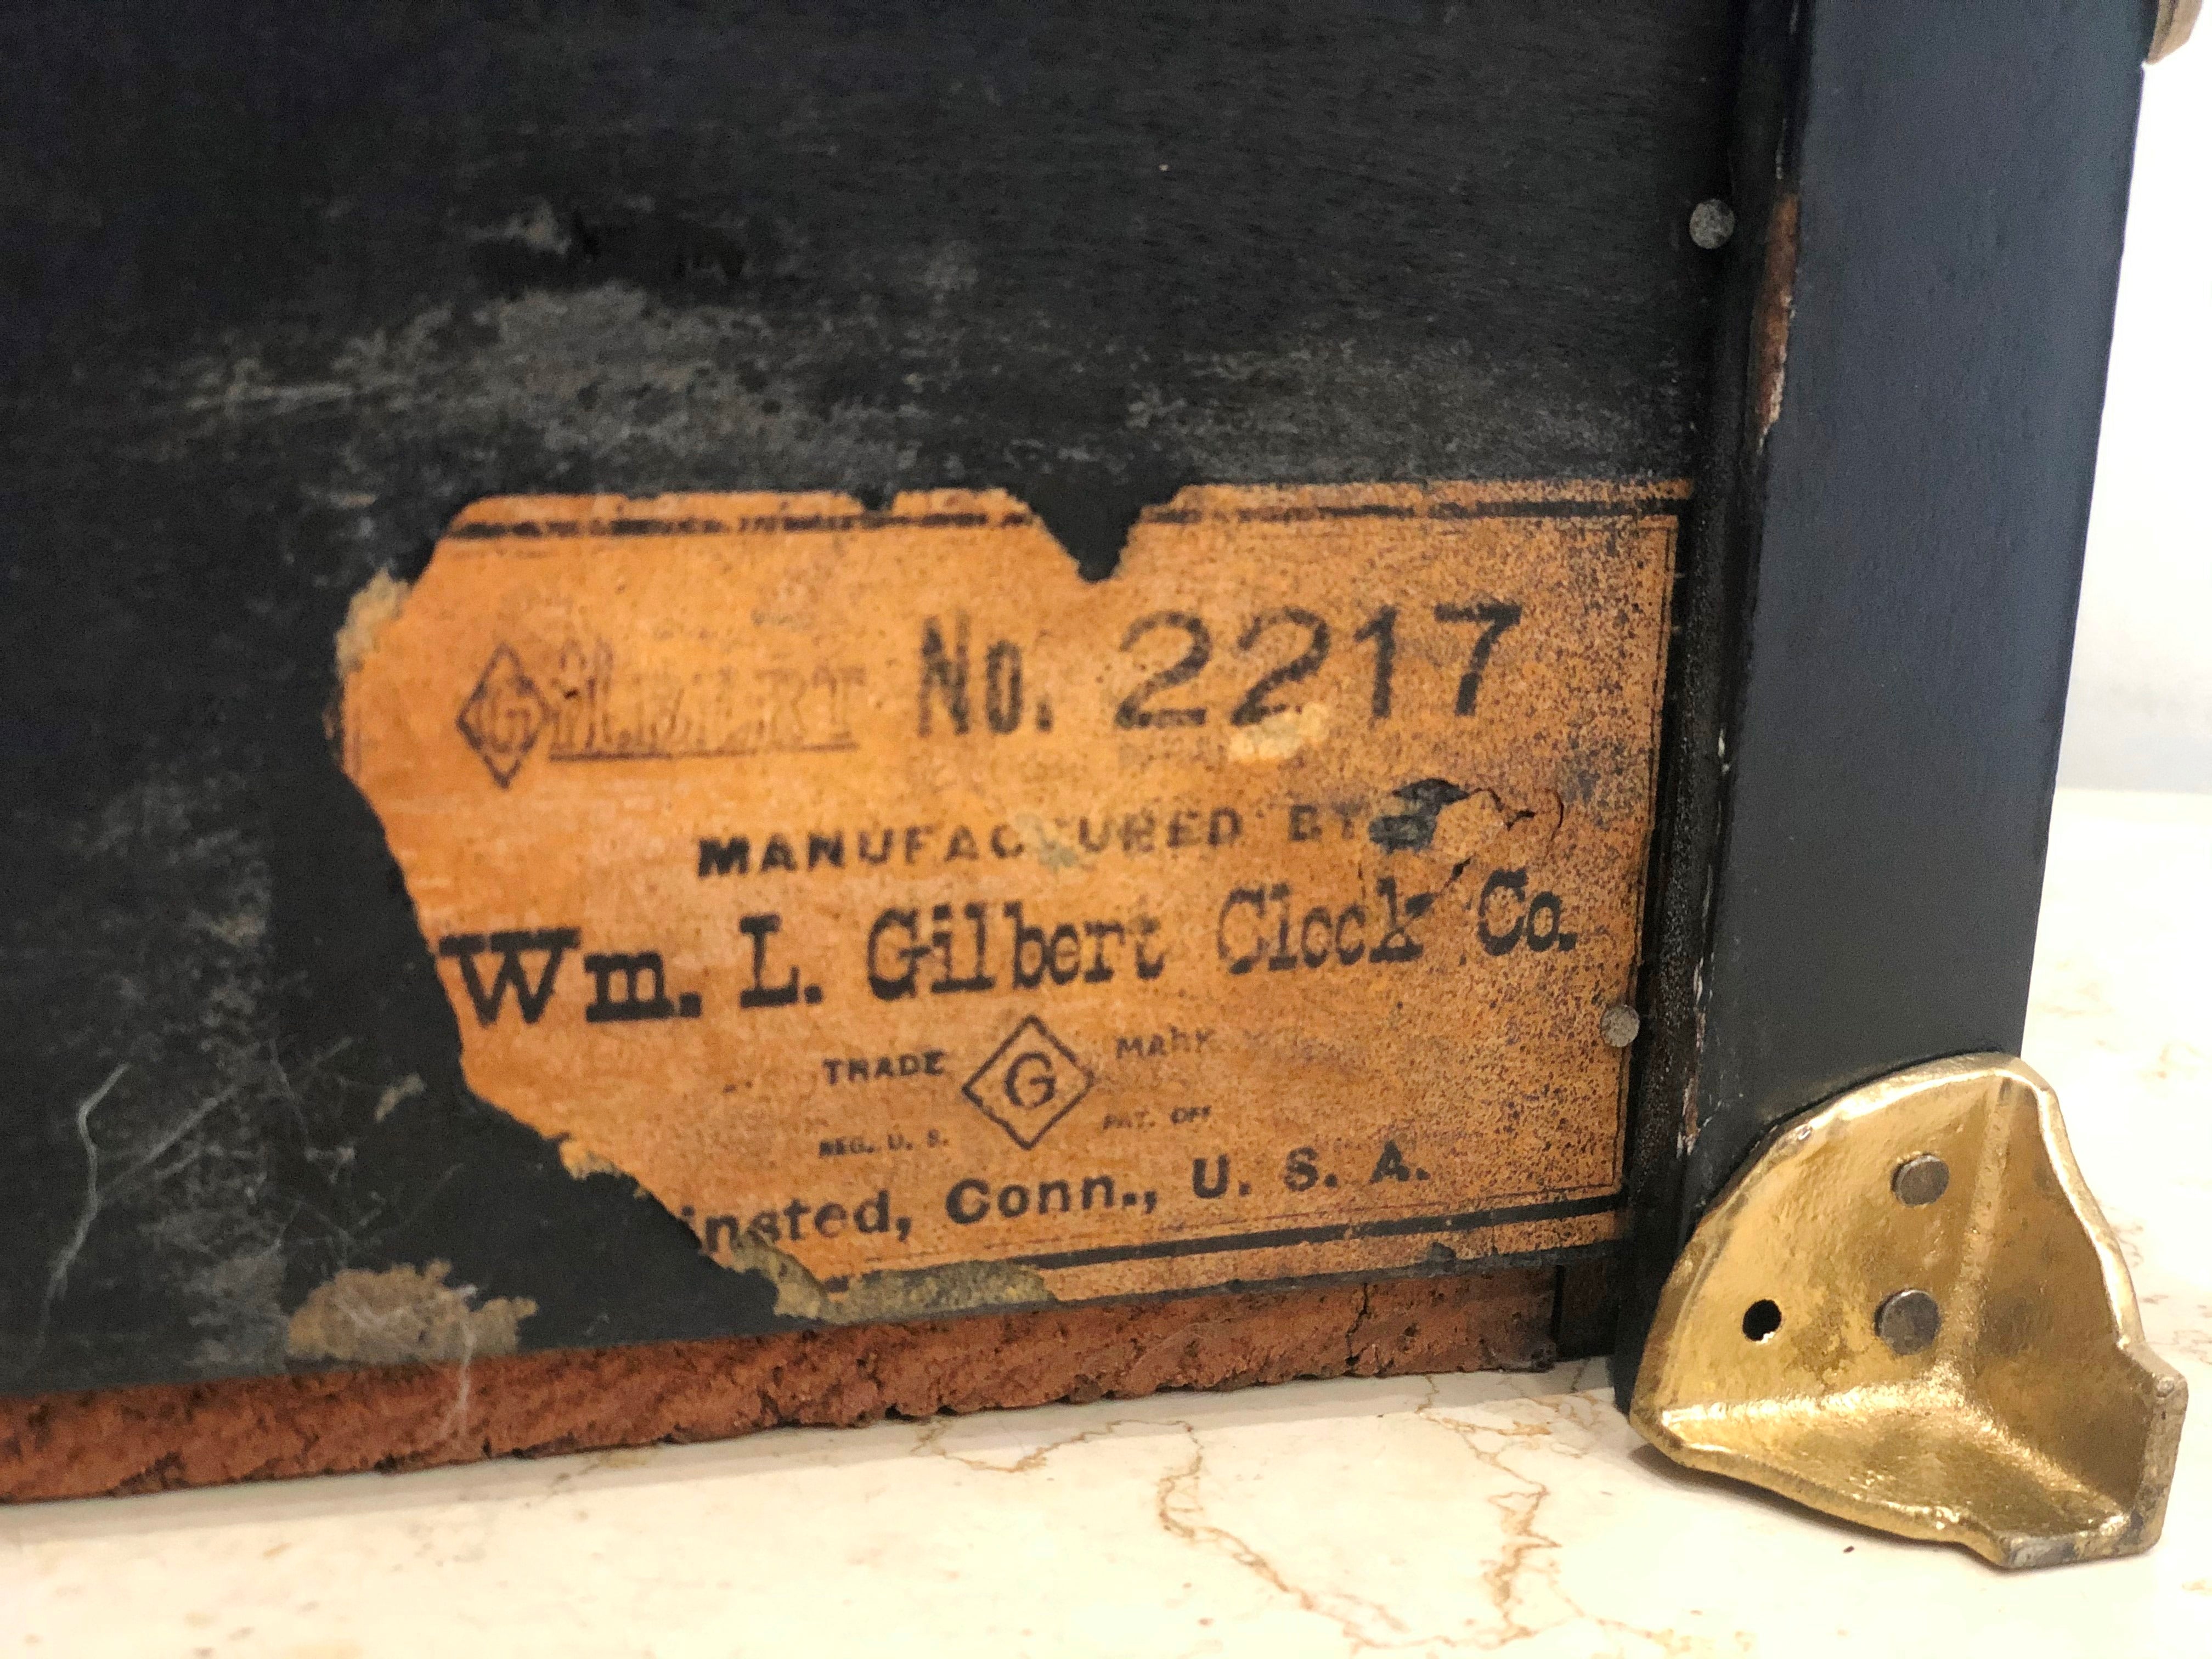 Antique GILBERT Mantel Clock | eXibit collection